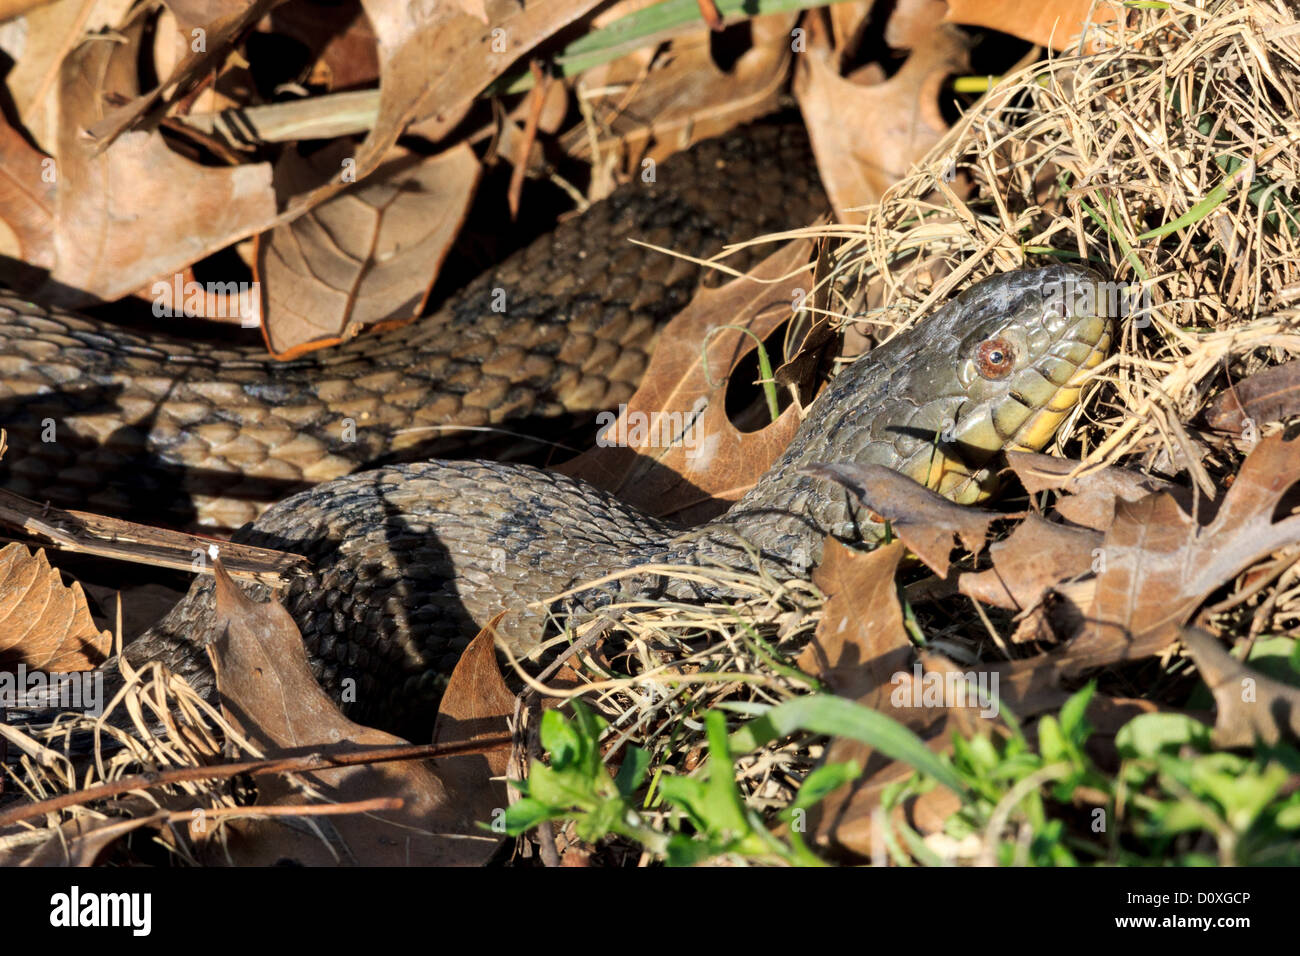 Diamondback Water snake, Duck Creek, Nerodia rhombifer, Reptile, Texas, USA, aquatic, watersnake, snake Stock Photo